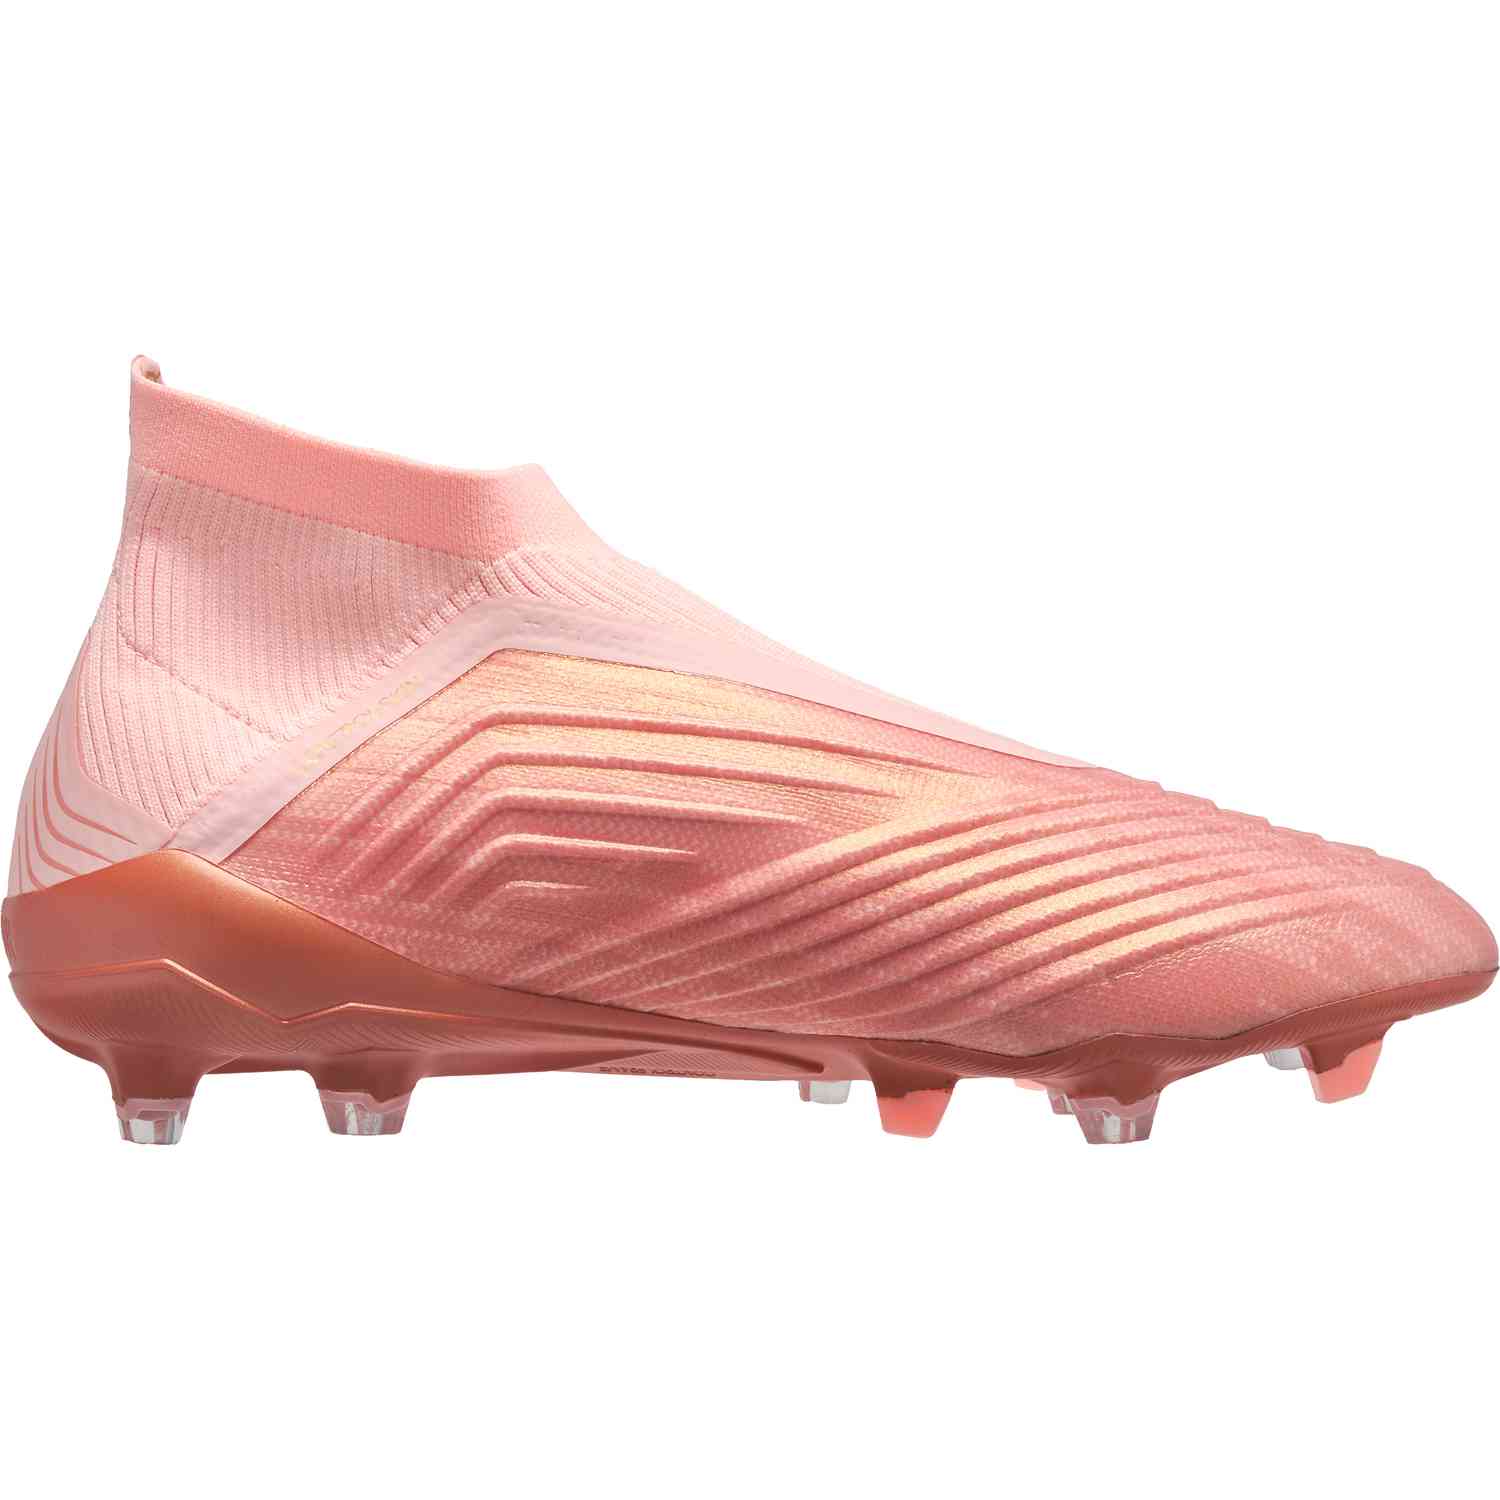 adidas predator pink shoes